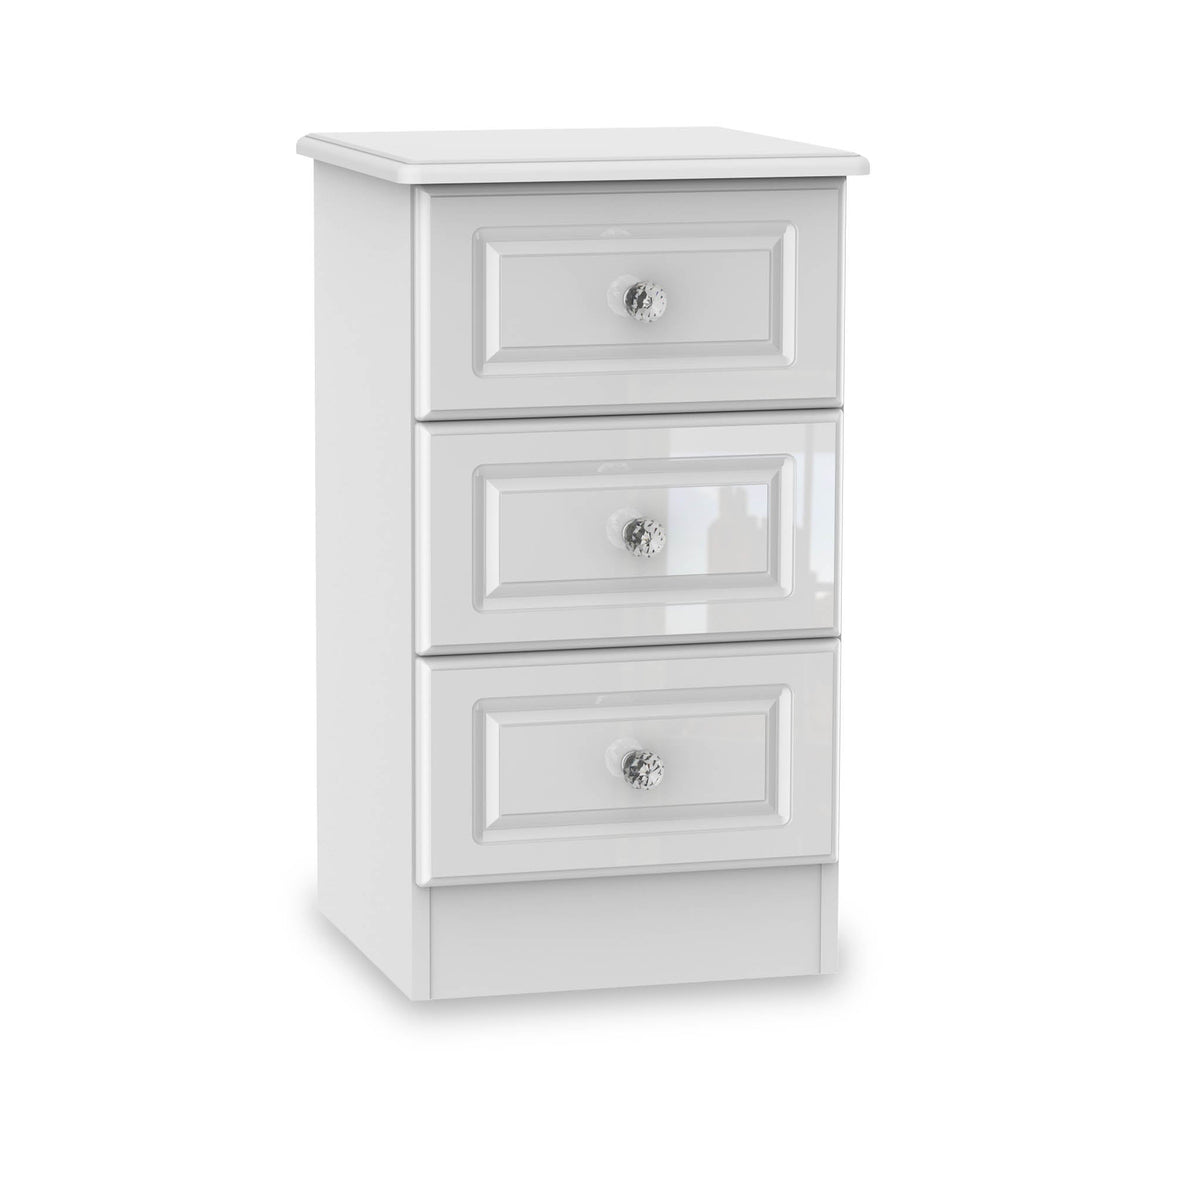 Kinsley White Gloss 3 Drawer Bedside Cabinet